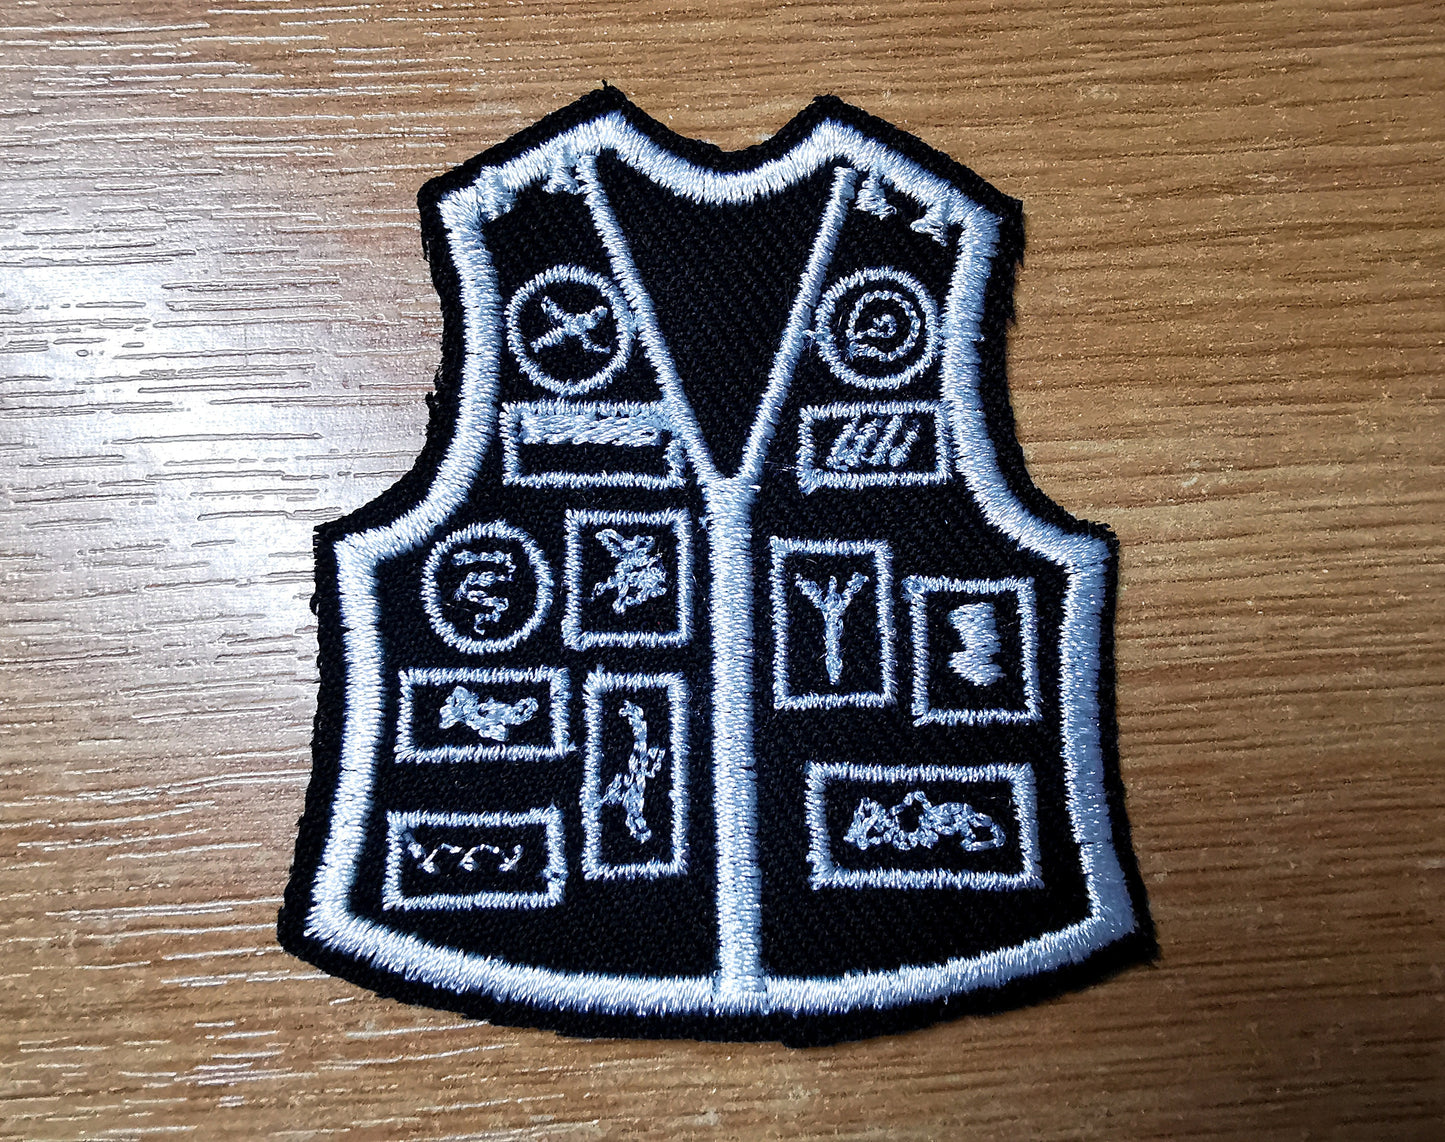 Battle Jacket Embroidered Patch Jacket Parody Death Metal Black Metal Patch Thrash Metal Viking